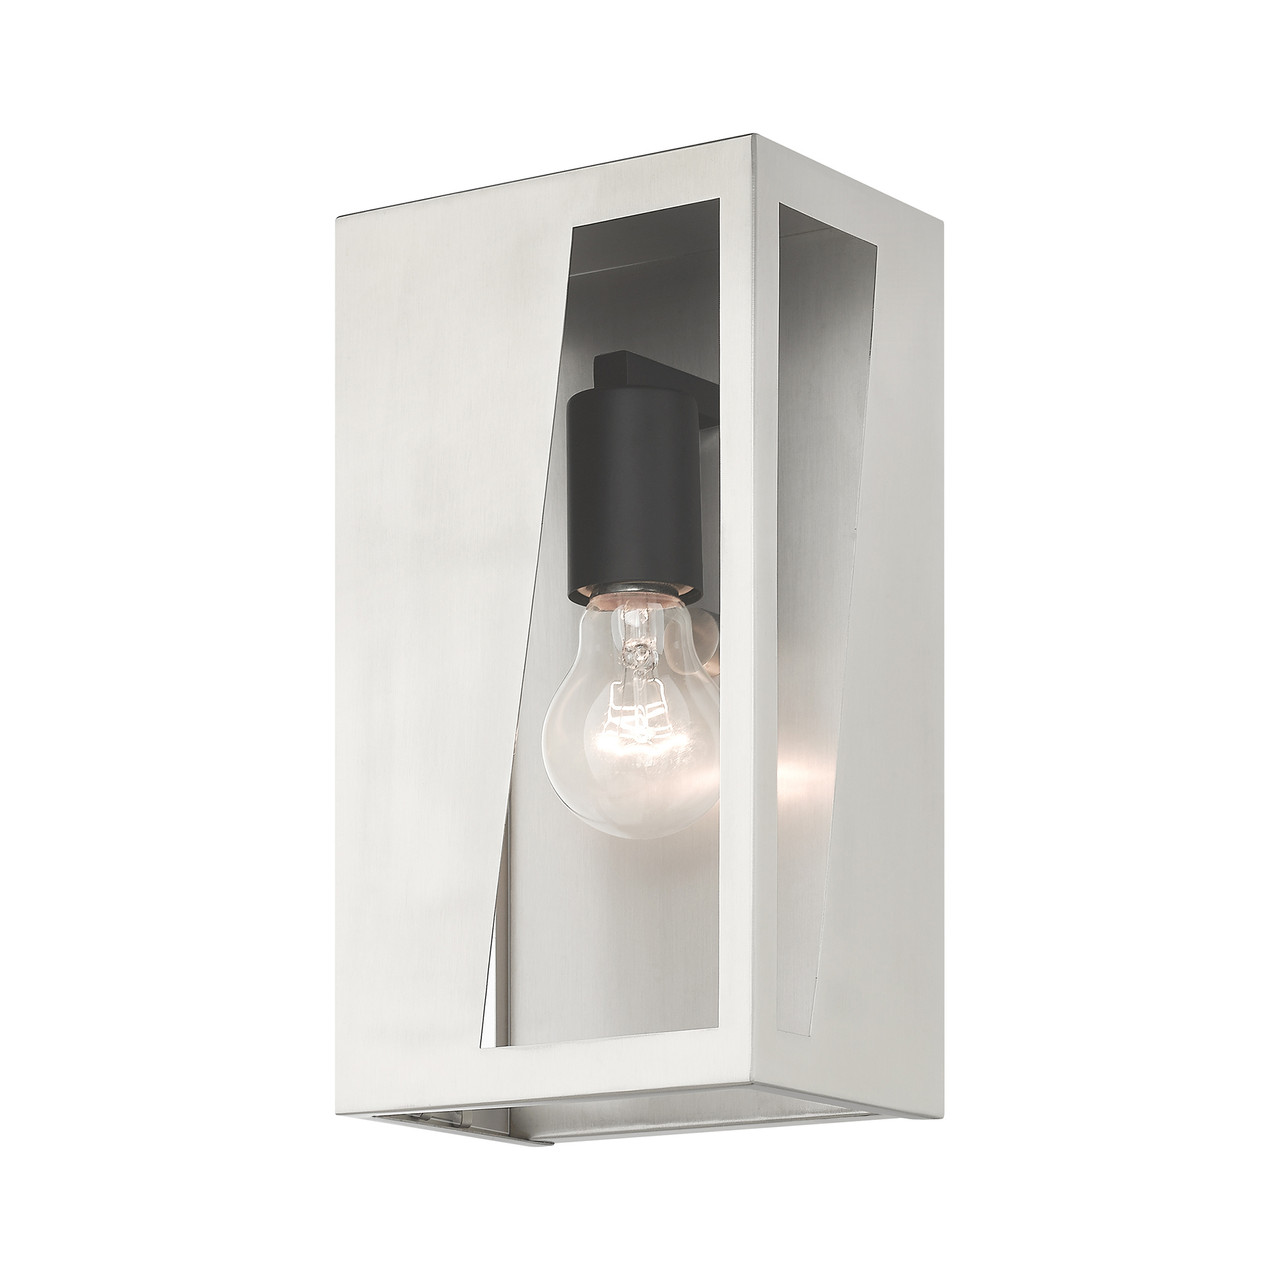 LIVEX LIGHTING 28932-91 1 Light Brushed Nickel Outdoor Medium ADA Wall Lantern with Black Finish Accents